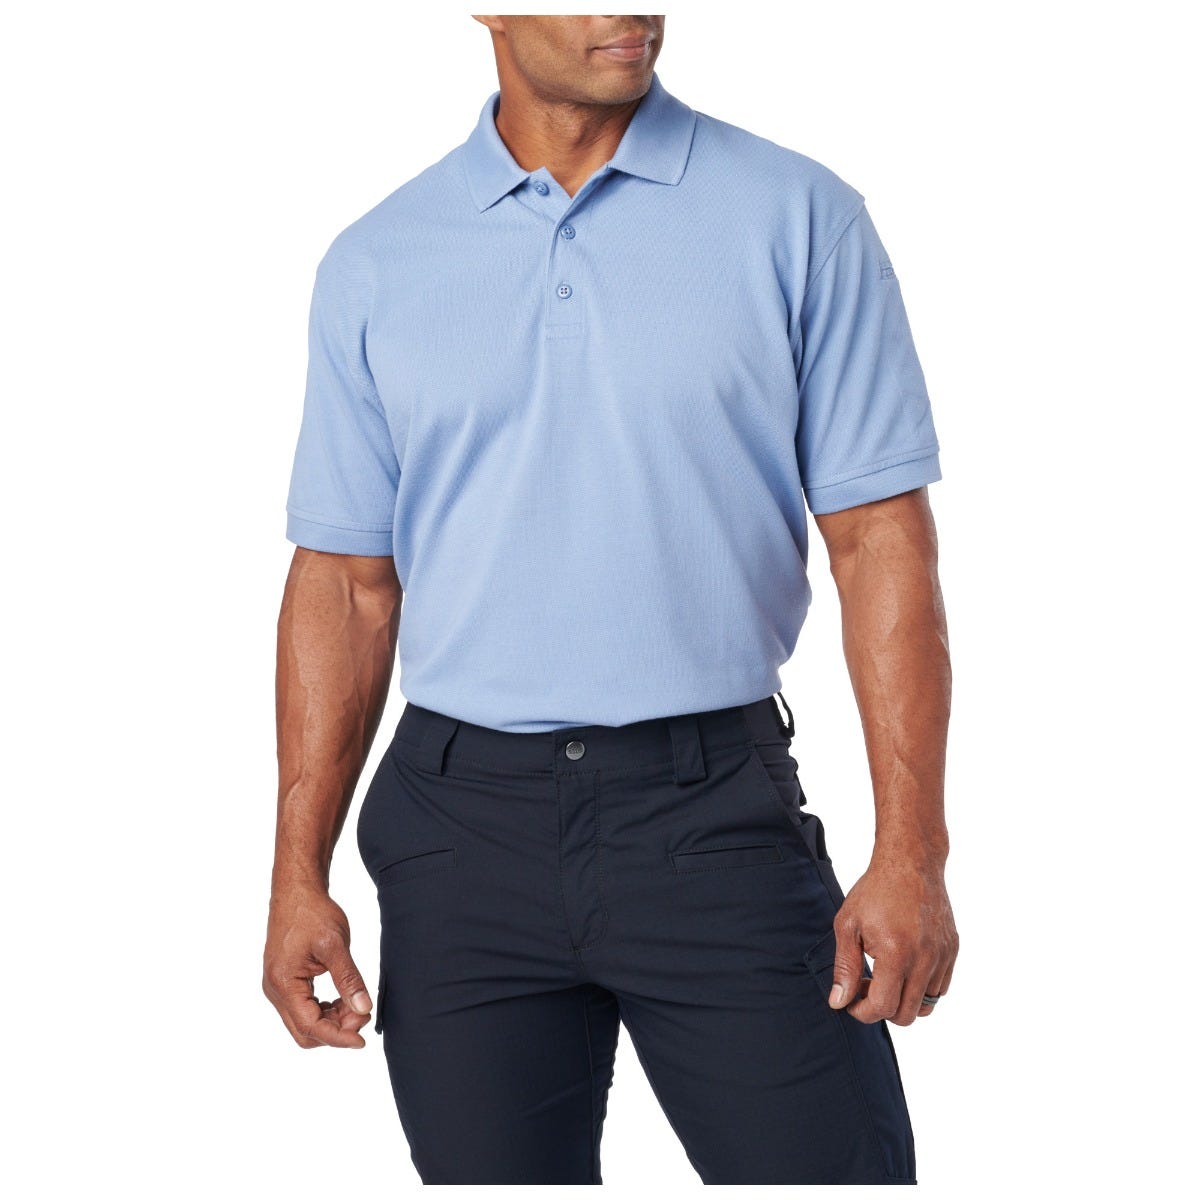 Perfection Uniform Navy Blue Police EMT Fire Short Sleeve Shirt Size 18.5 Reg 